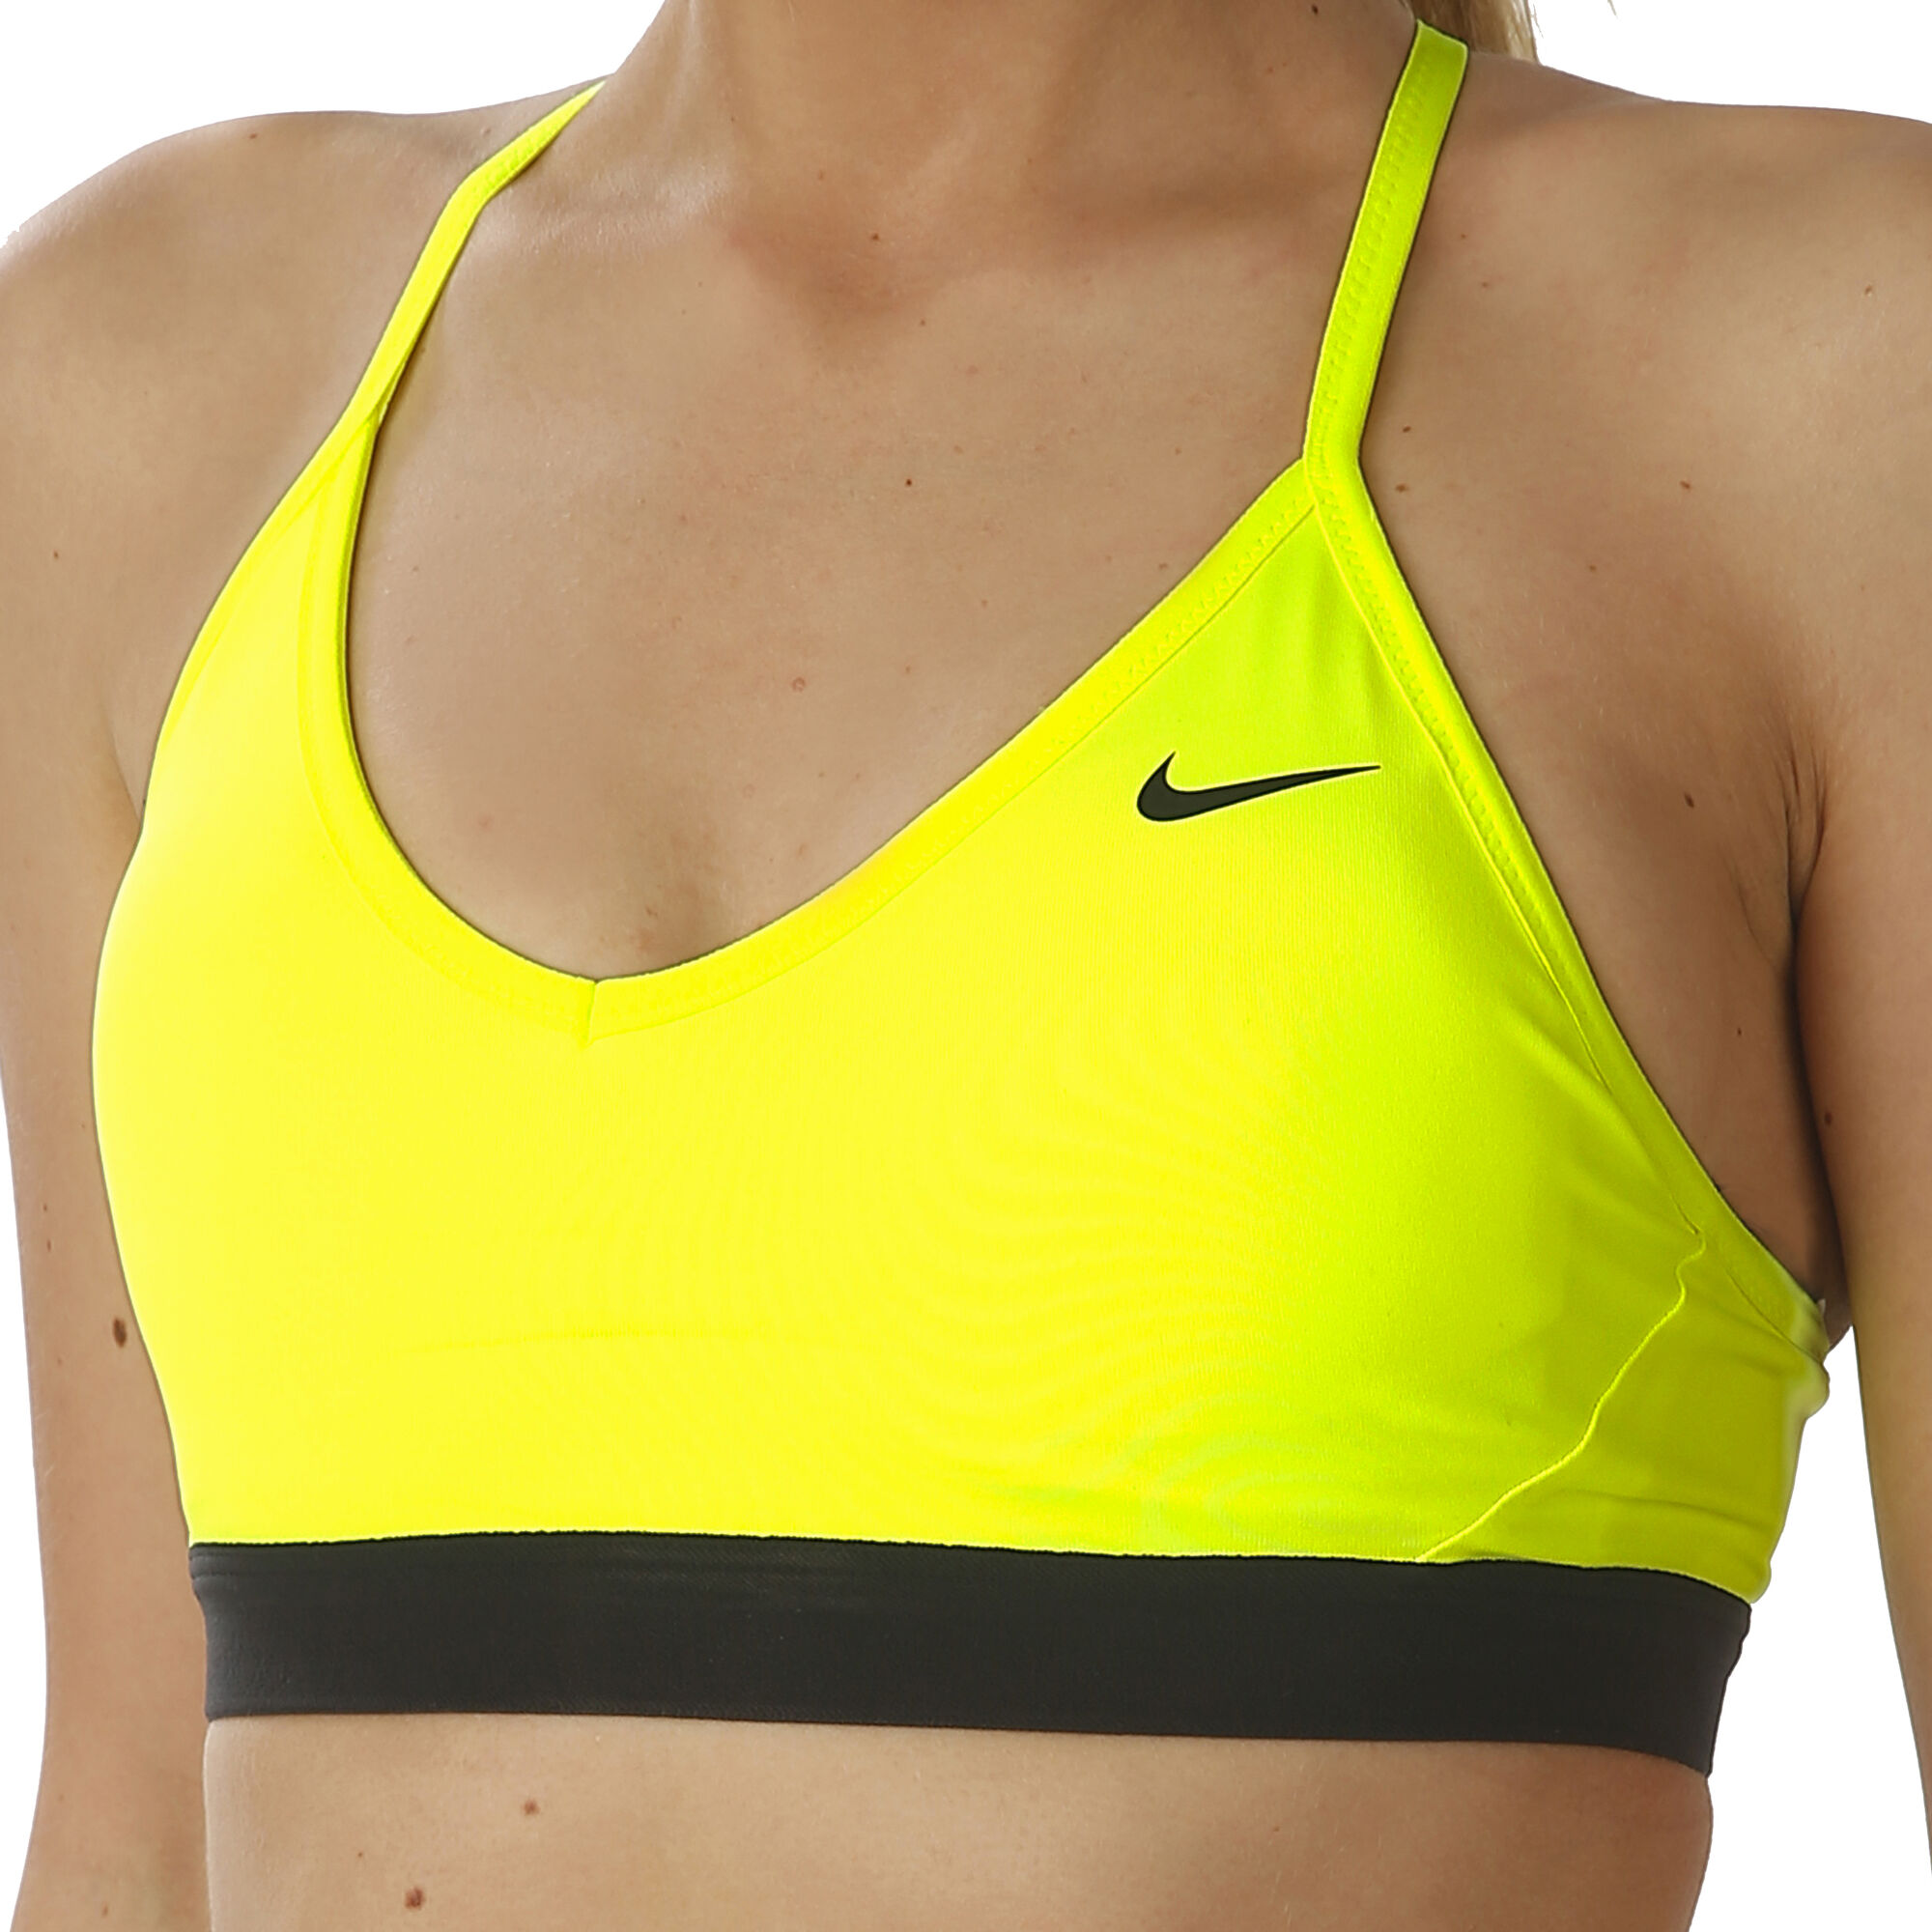 Indy Sports Bras Women - Neon Yellow, Black